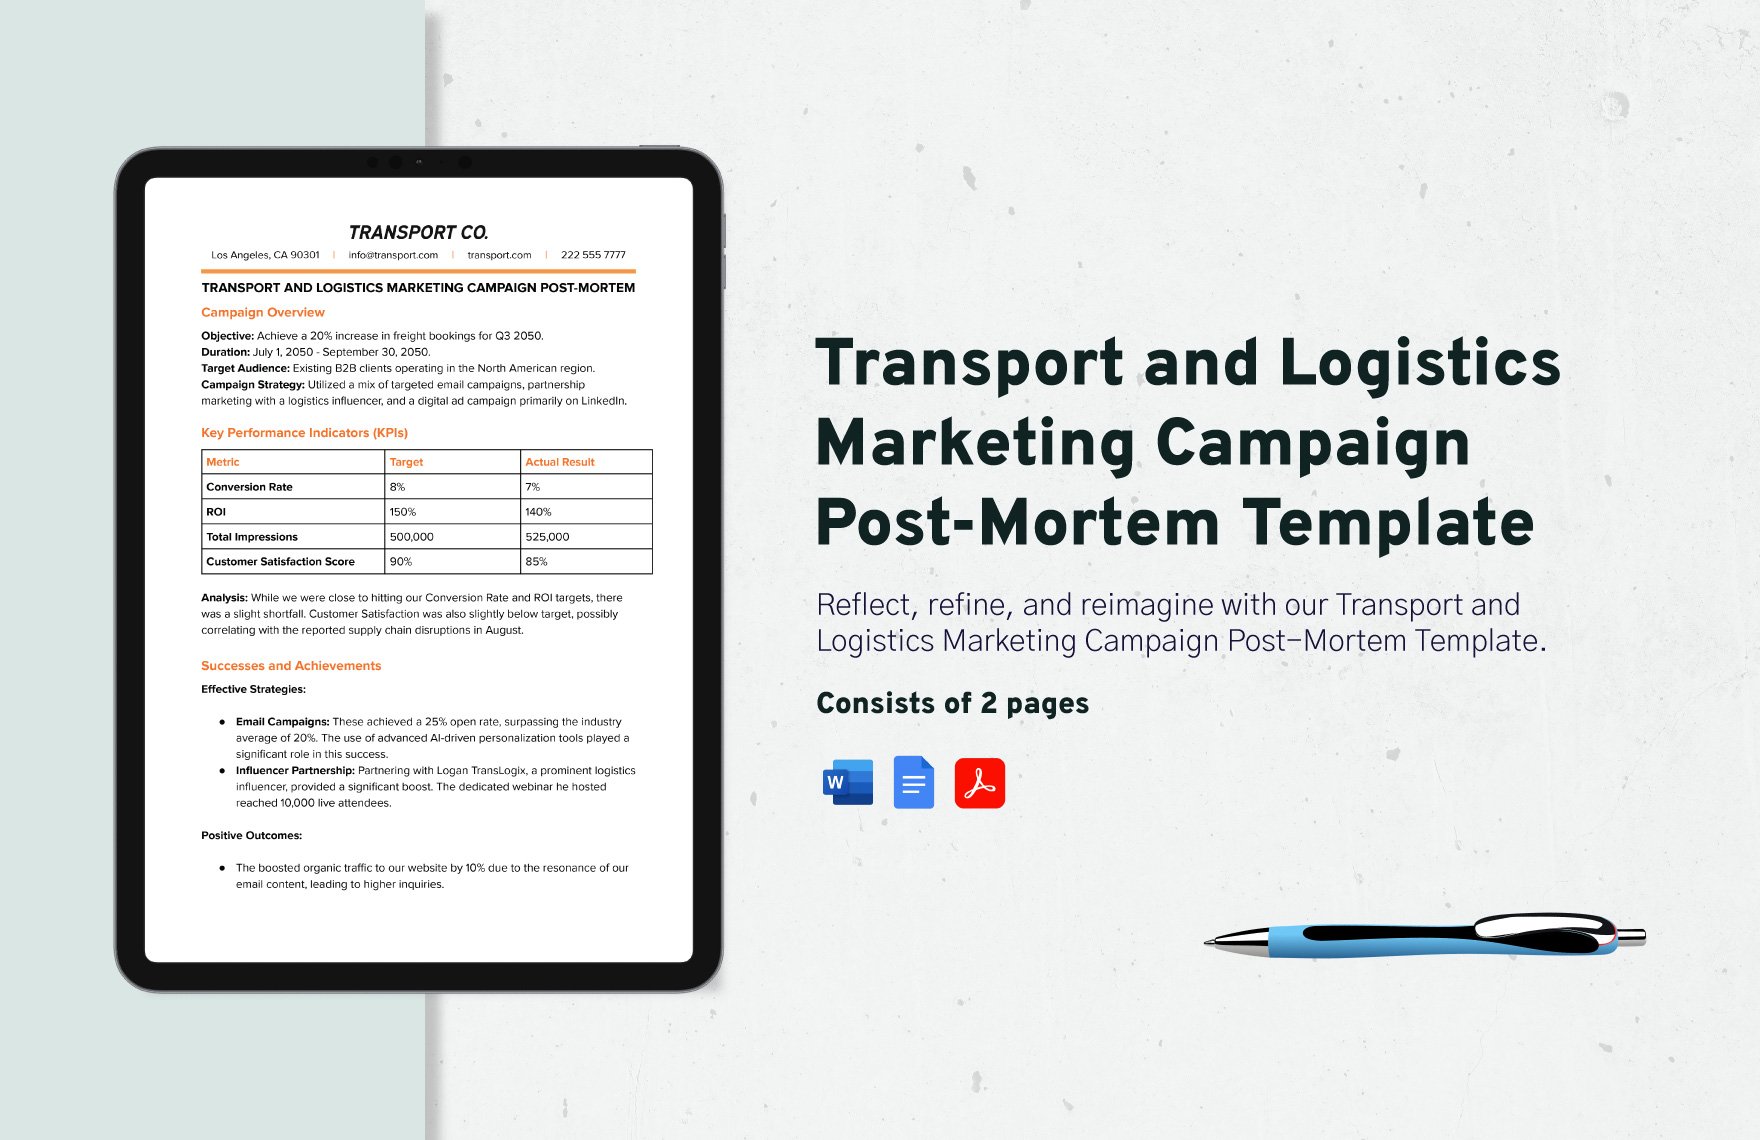 Transport and Logistics Marketing Campaign Post-Mortem Template